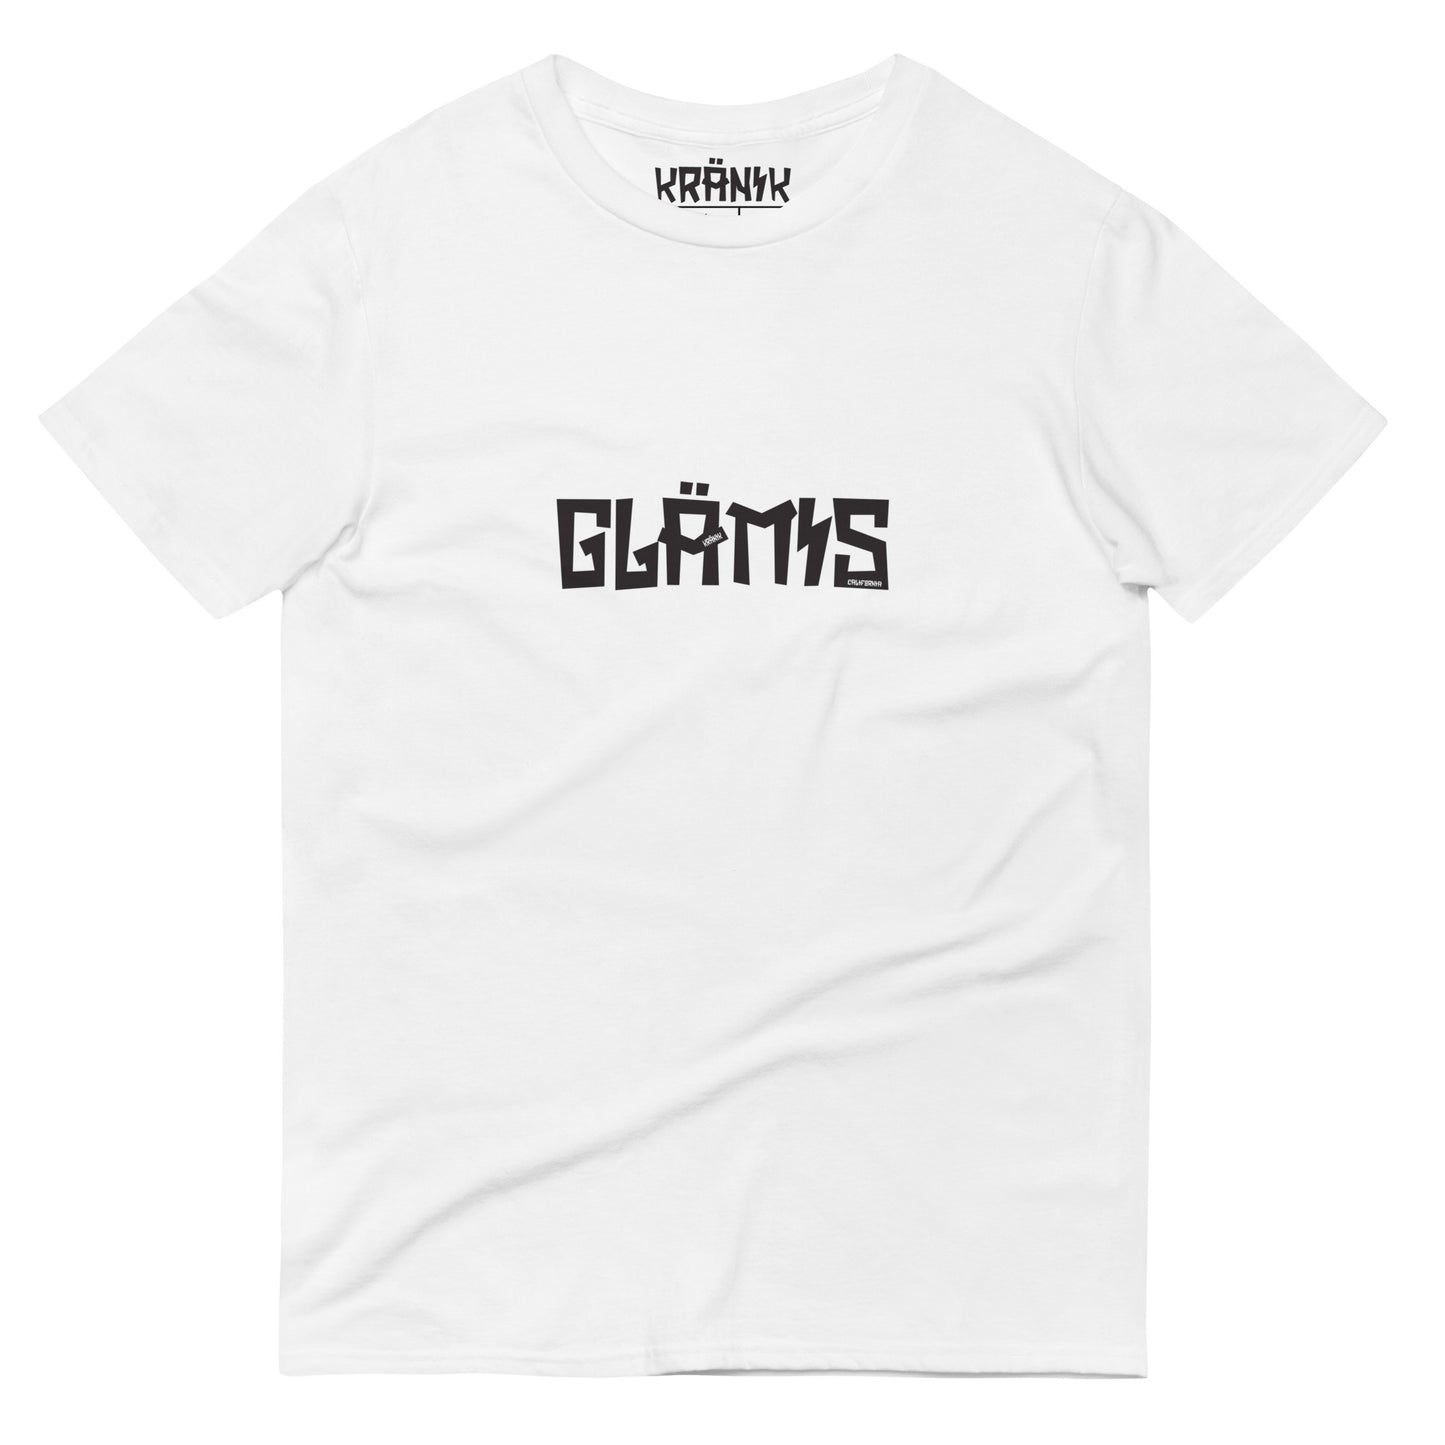 Kranik Brand / T-Shirt / Glamis